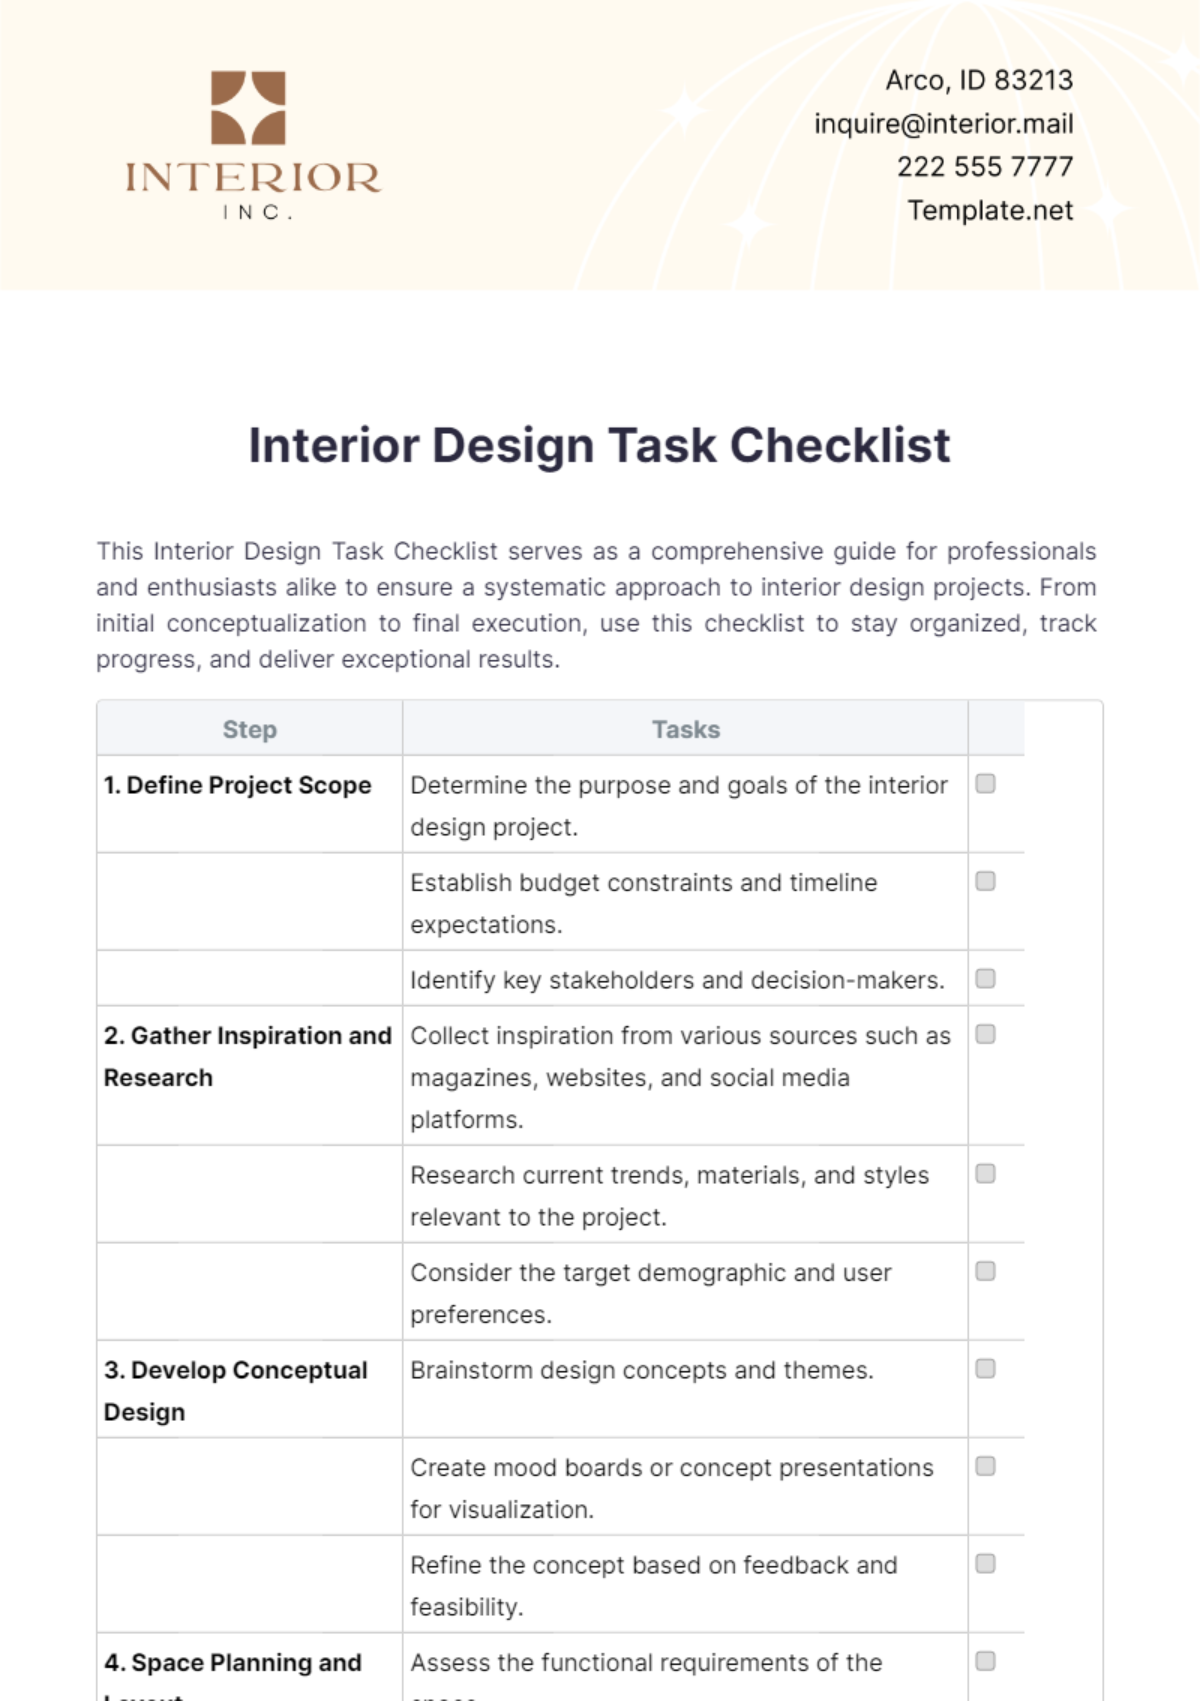 Interior Design Task Checklist Template